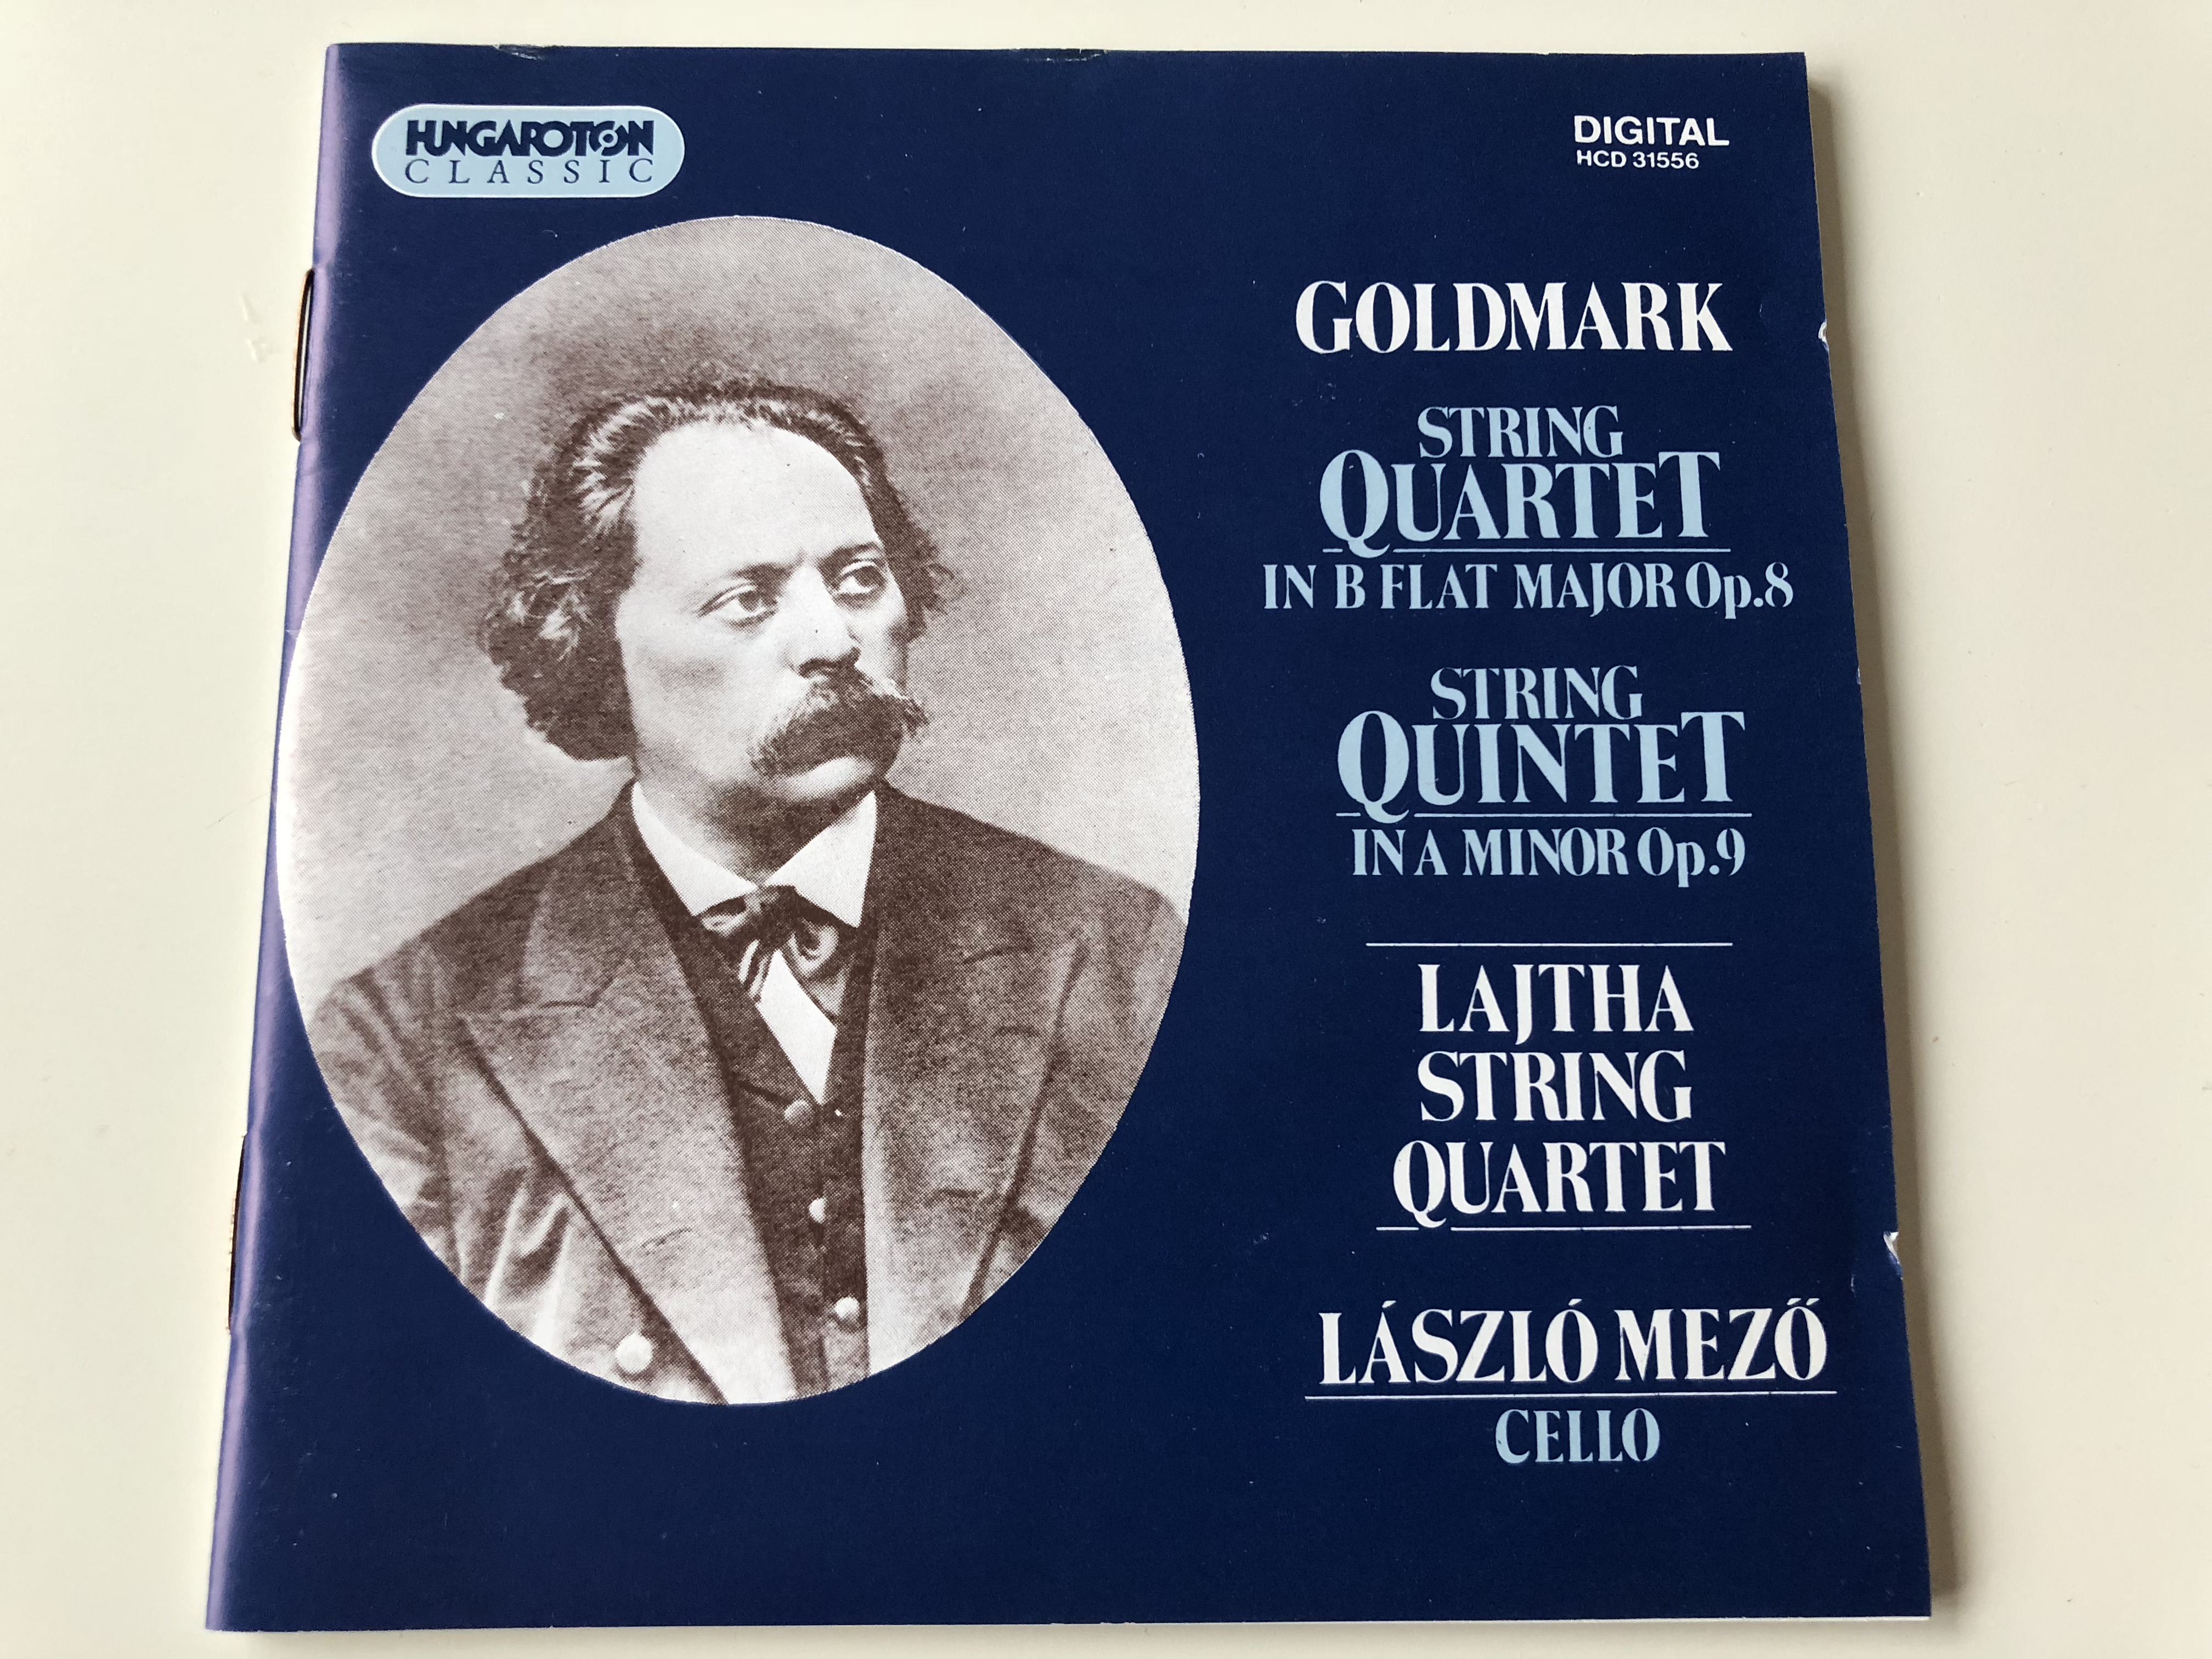 goldmark-string-quartet-in-b-flat-major-op.8-string-quintet-in-a-minor-op.-9-lajtha-string-quartet-l-szl-mez-cello-hungaroton-classic-hcd-31556-audio-cd-1993-1-.jpg